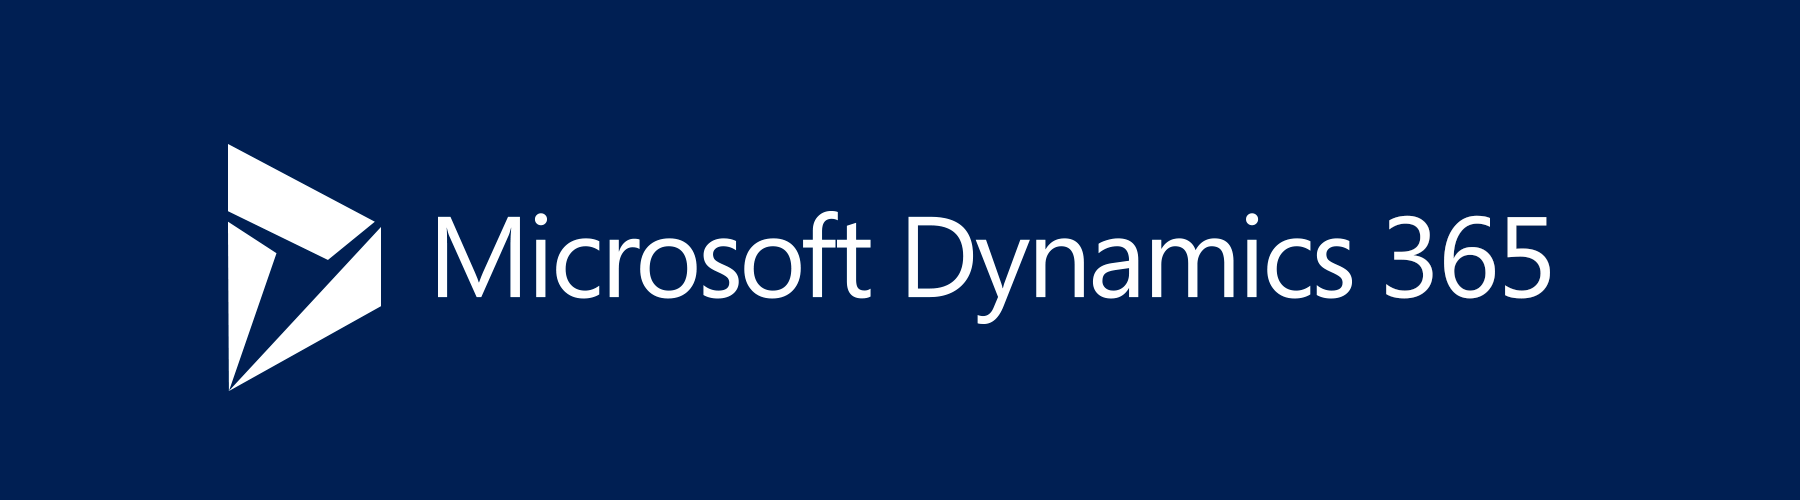 Microsoft Office 365 Dynamics Logo - Microsoft Dynamics 365 - BDO Canada - IT Solutions